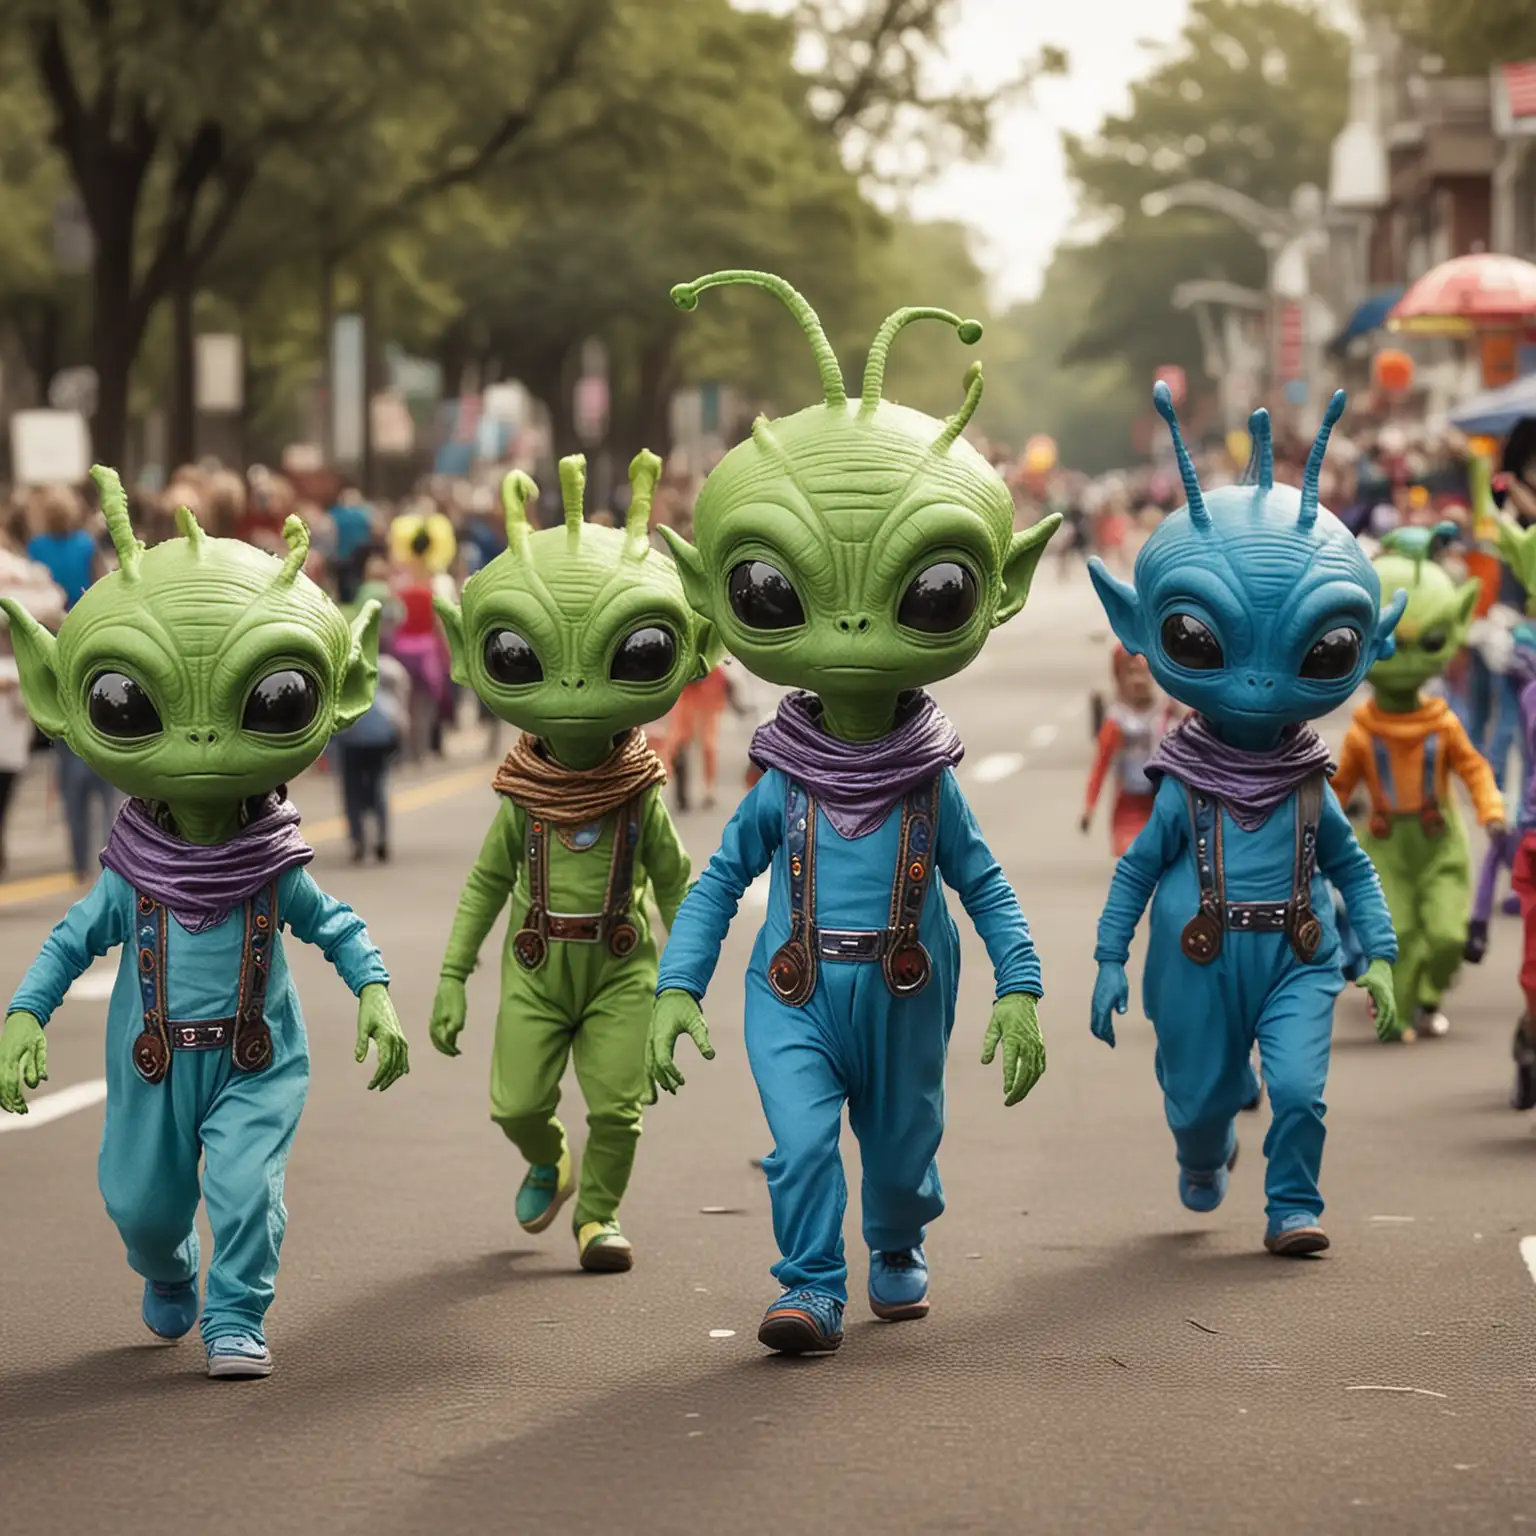 create a fun and cute parade featuring aliens